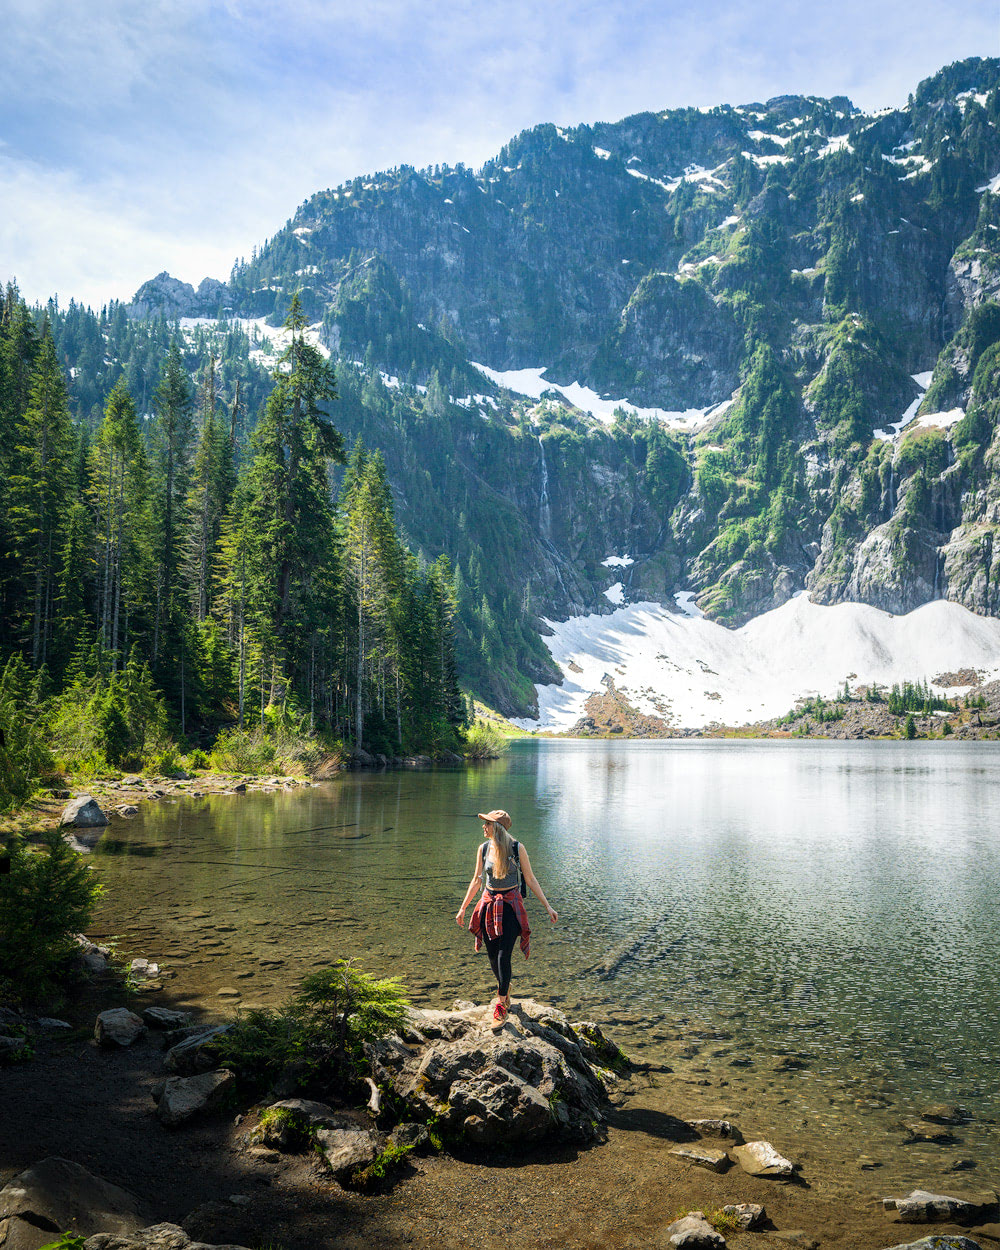 Beginner Friendly Hikes in Washington State - Lake 22